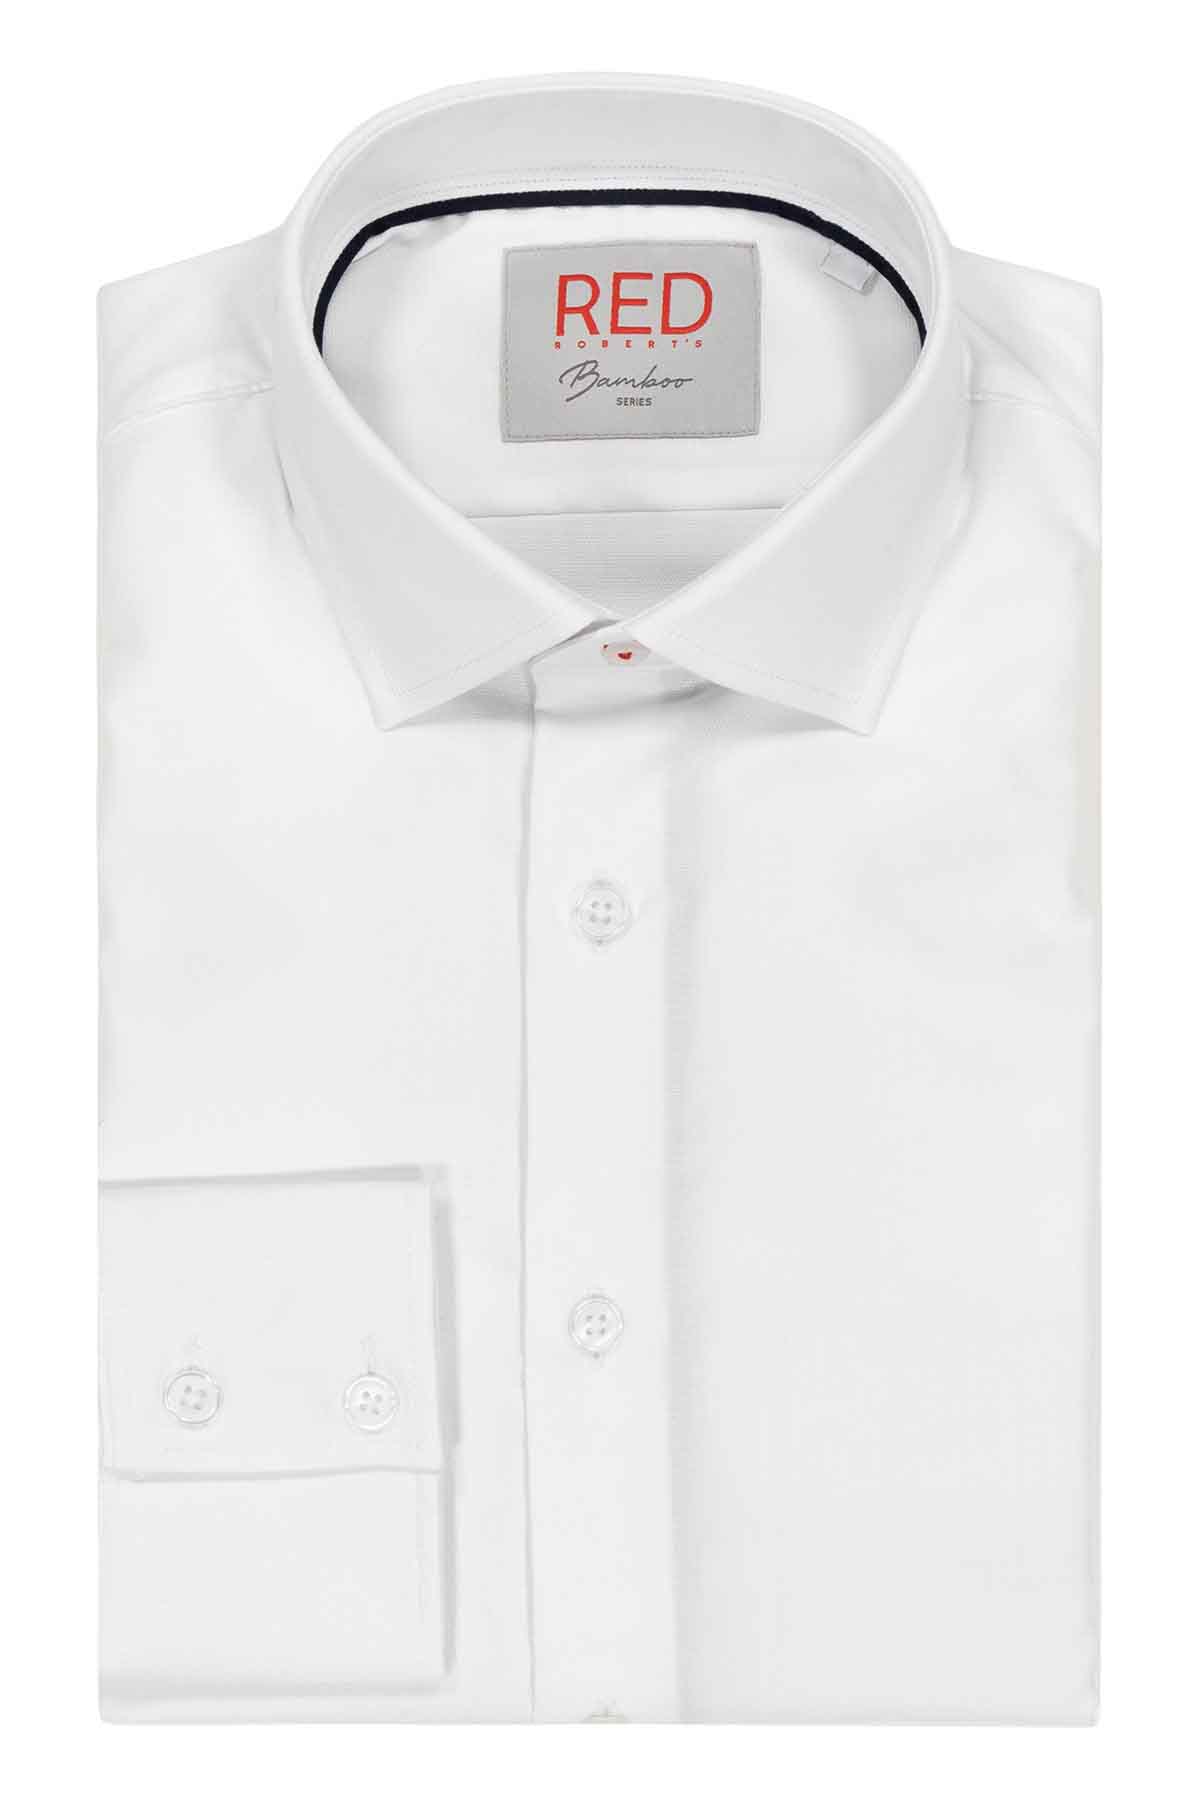 Camisa Vestir BAMBOO Roberts Red Blanco Slim Fit